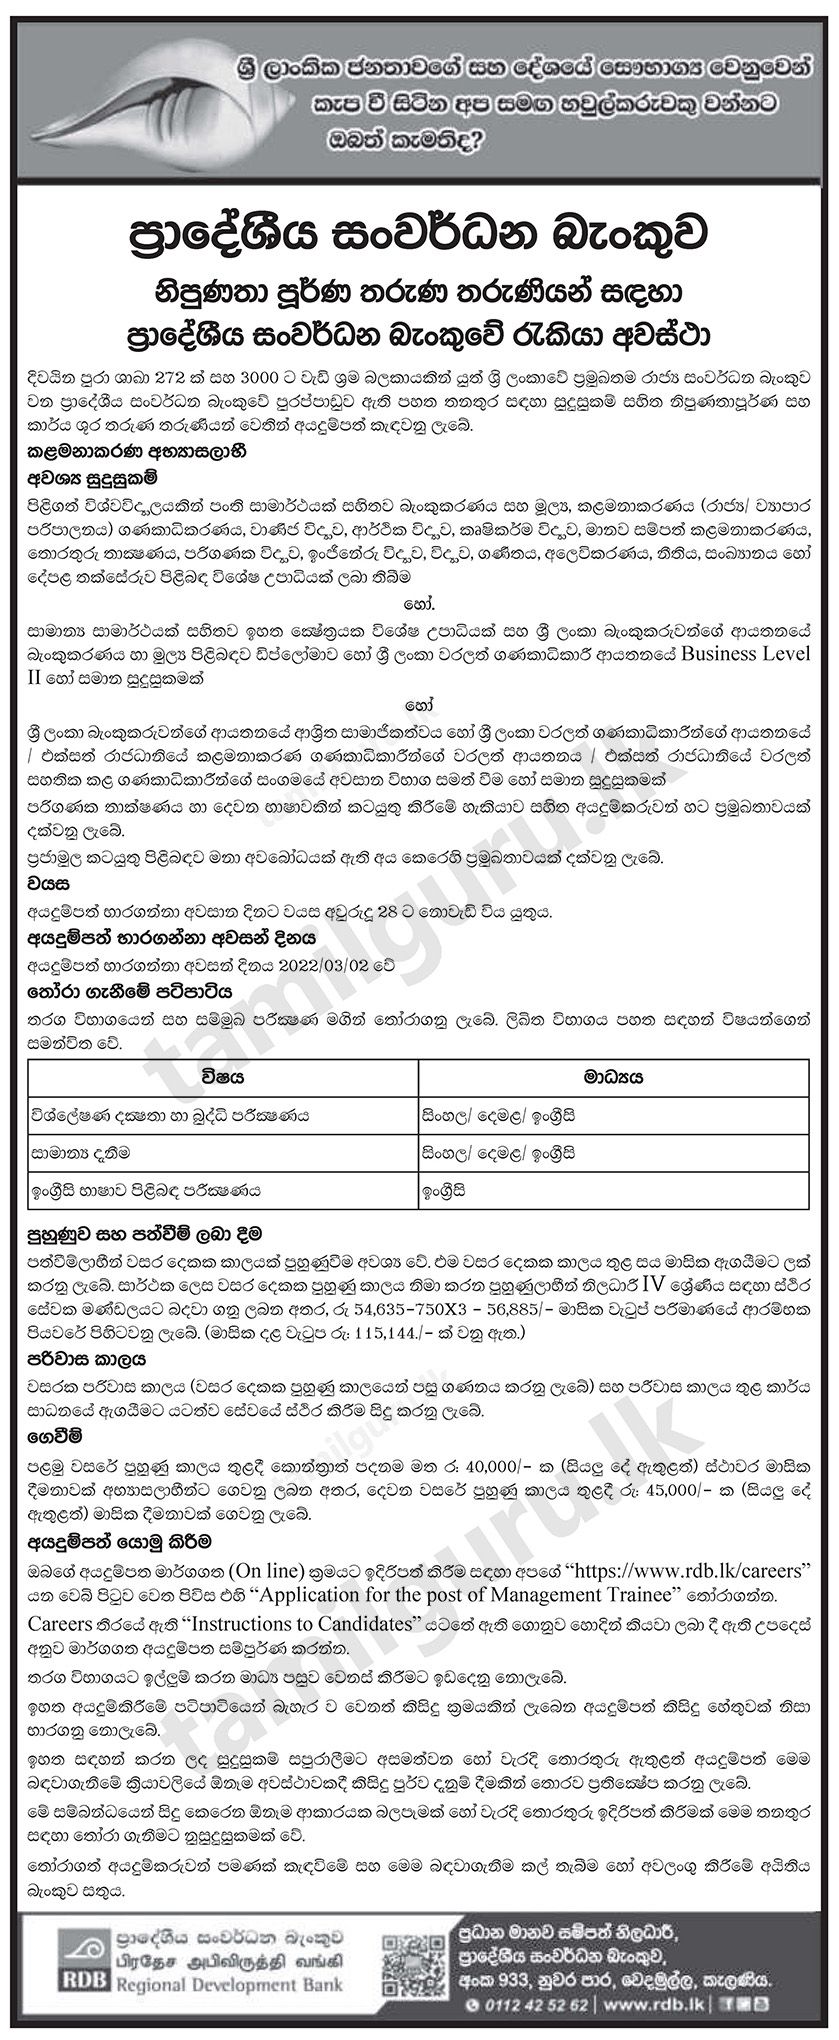 Regional Development Bank (RDB) Management Trainee Vacancies 2022 - Notice in Sinhala